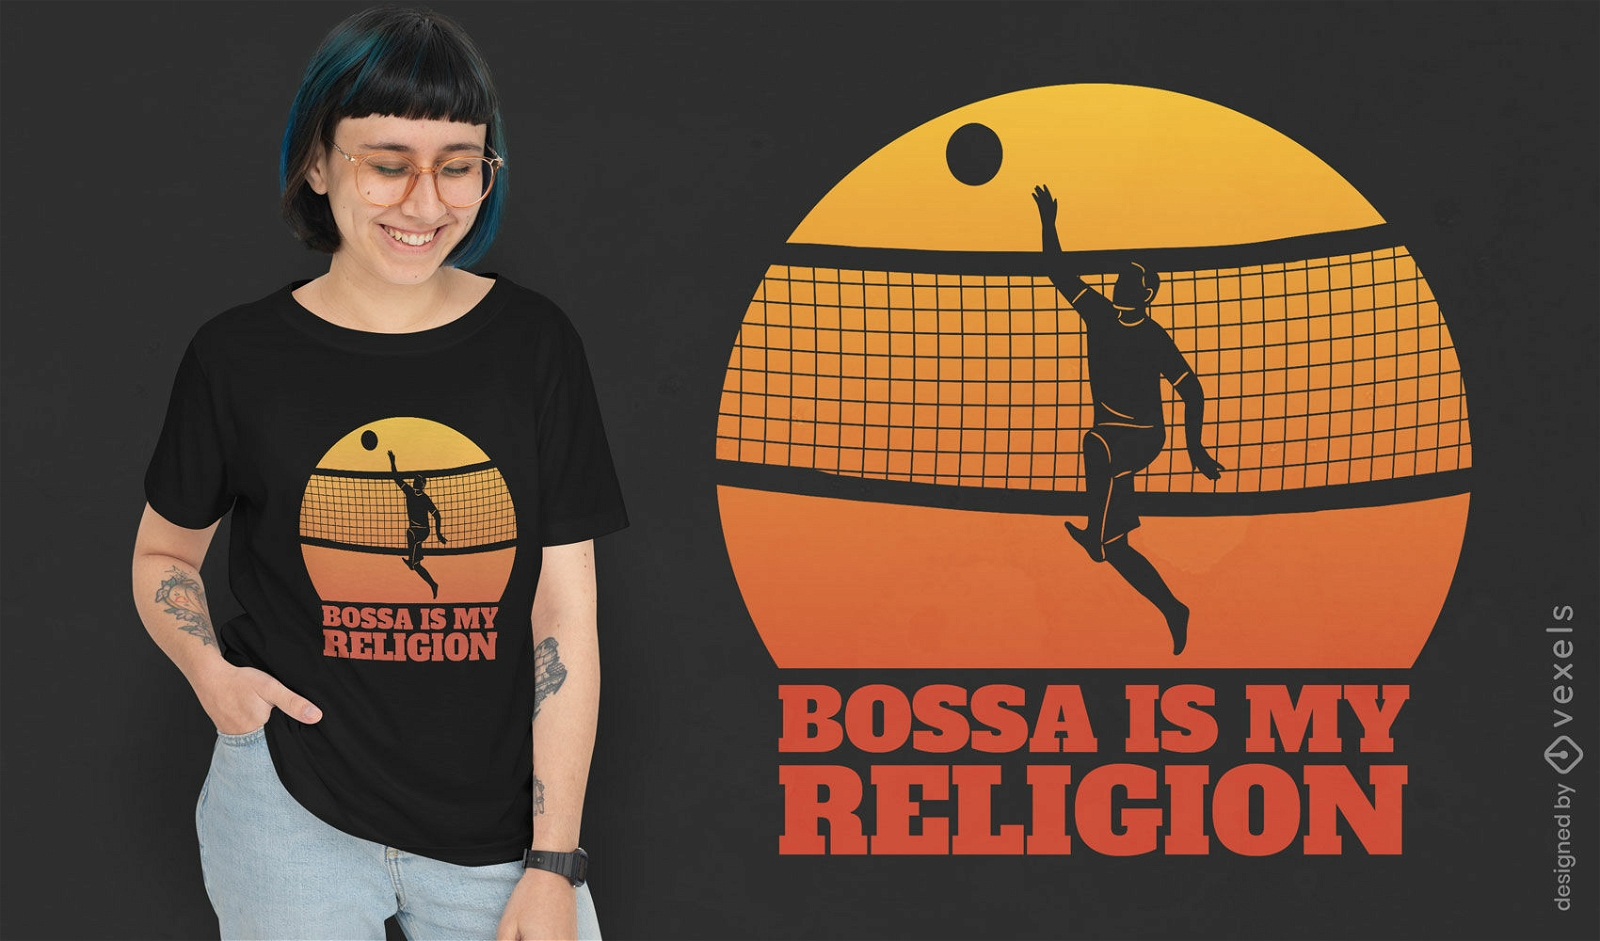 Bossaball is my religion t-shirt design